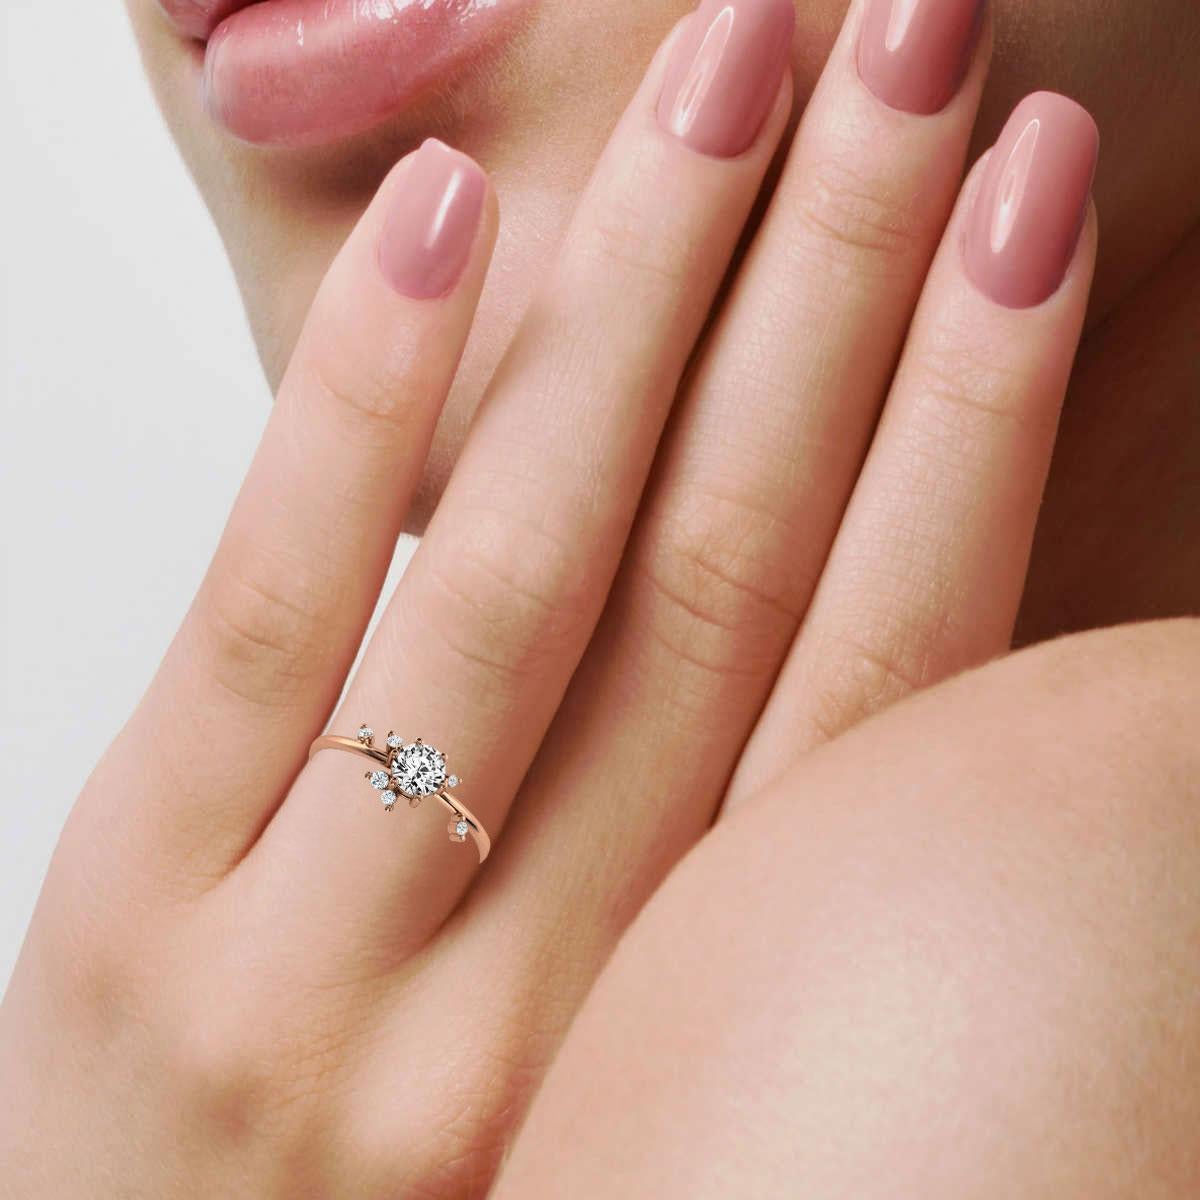 3 carat diamond ring designs